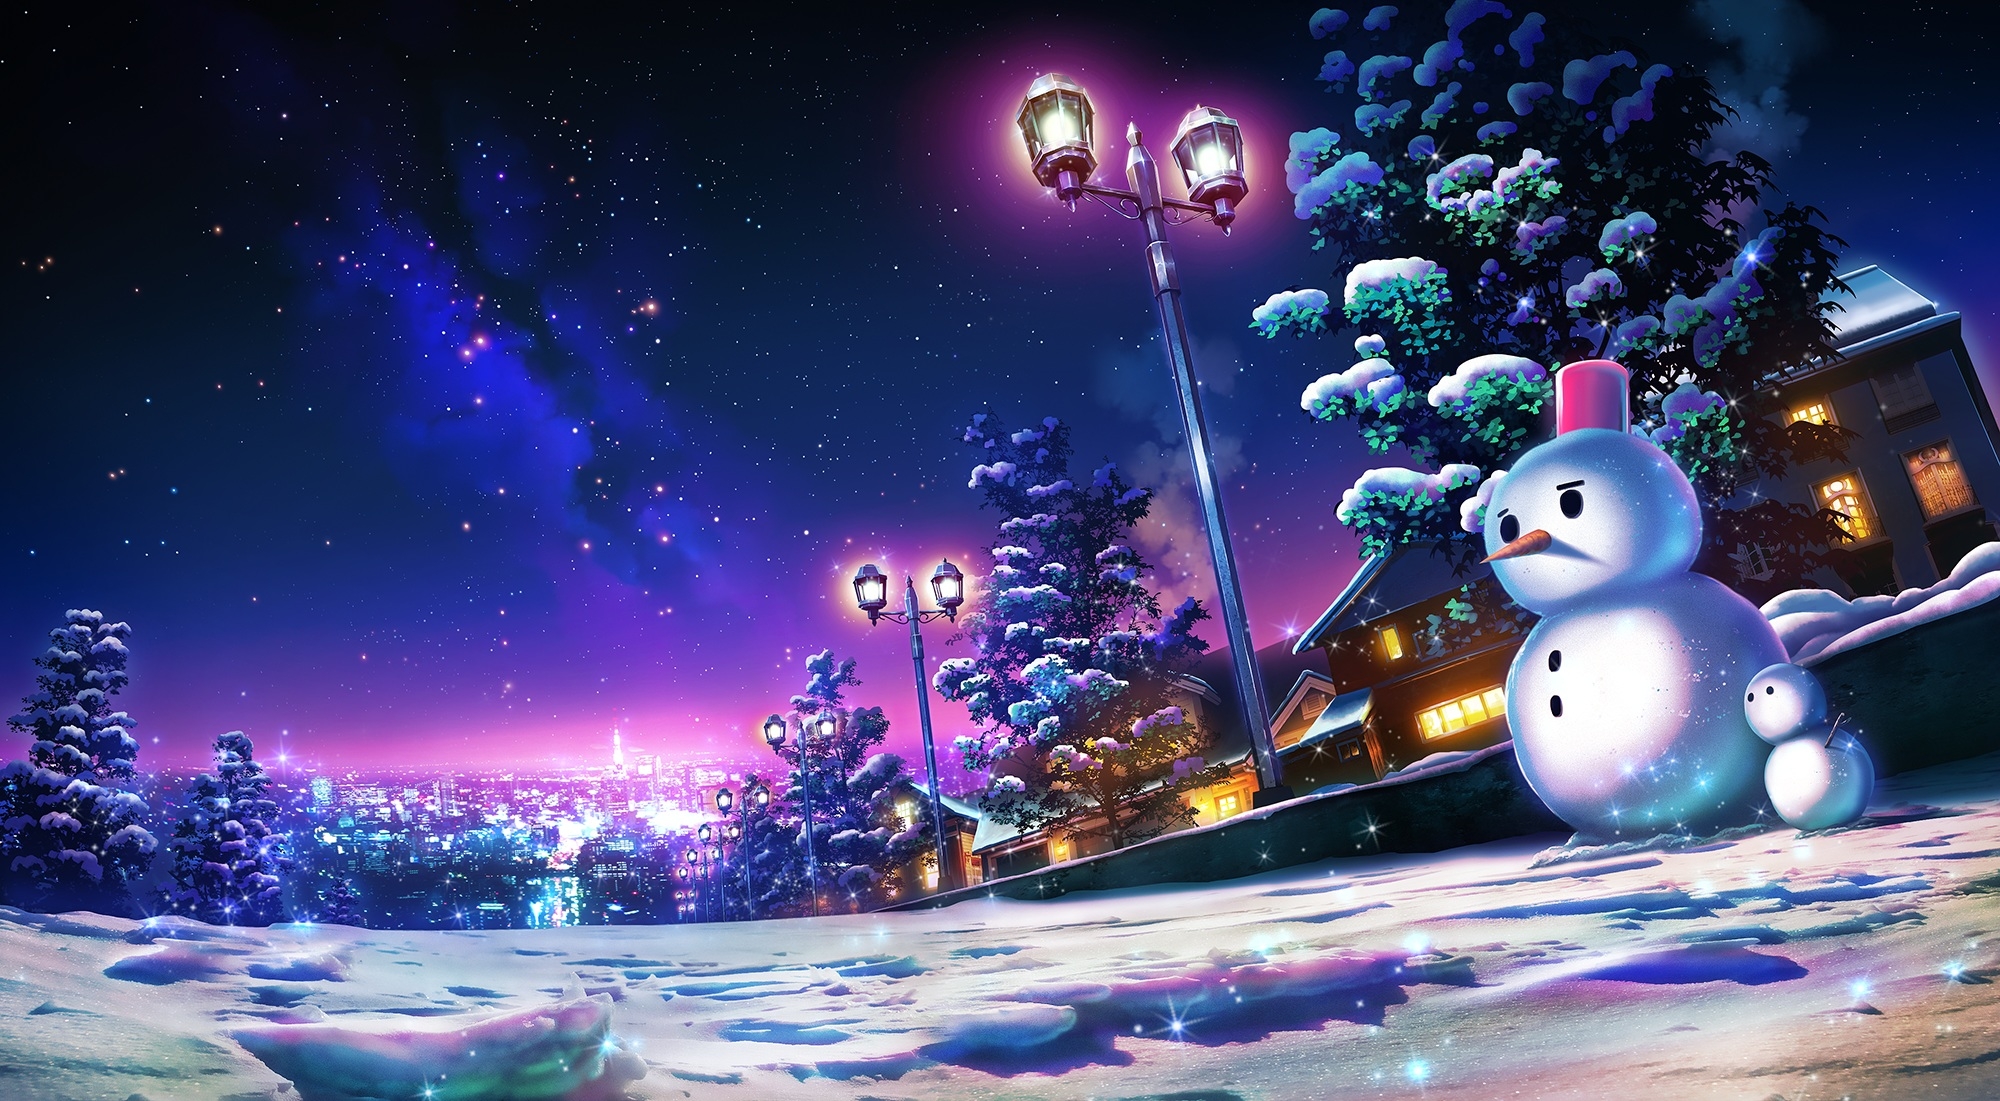 Wallpapers anime wallpaper snowman cityscape on the desktop